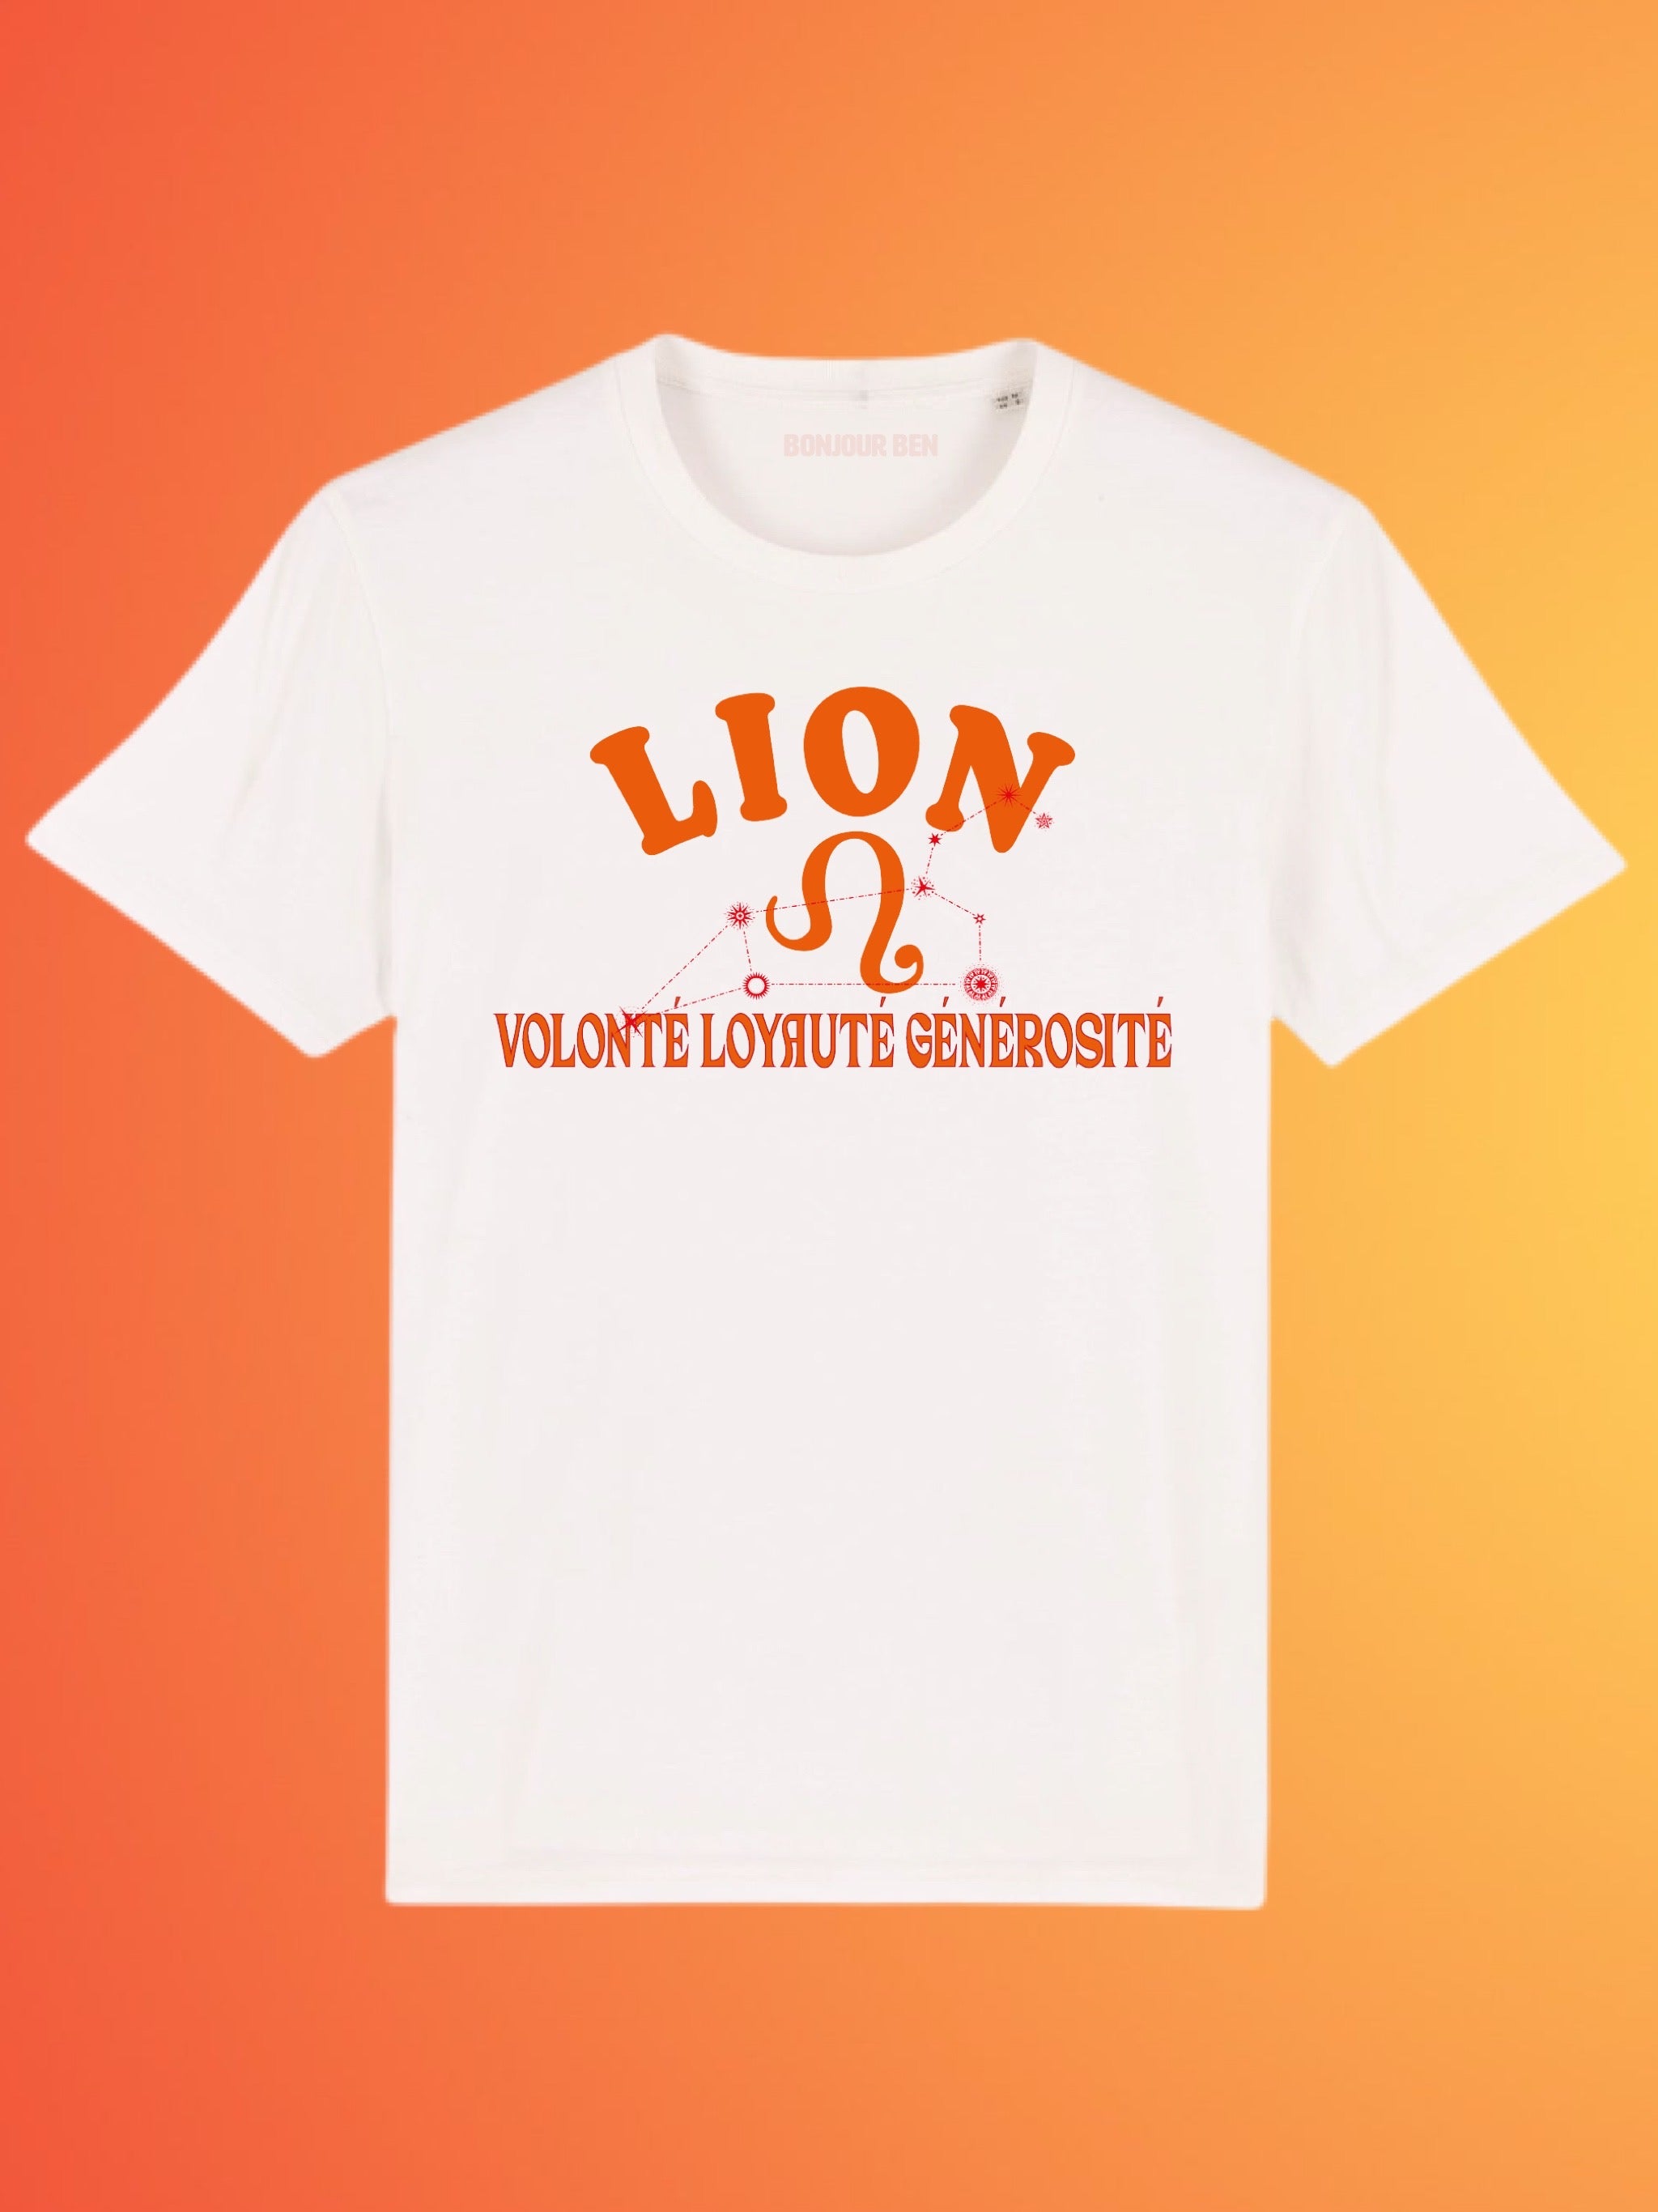 Zodiac signs T-Shirt Lion - White/Orange 